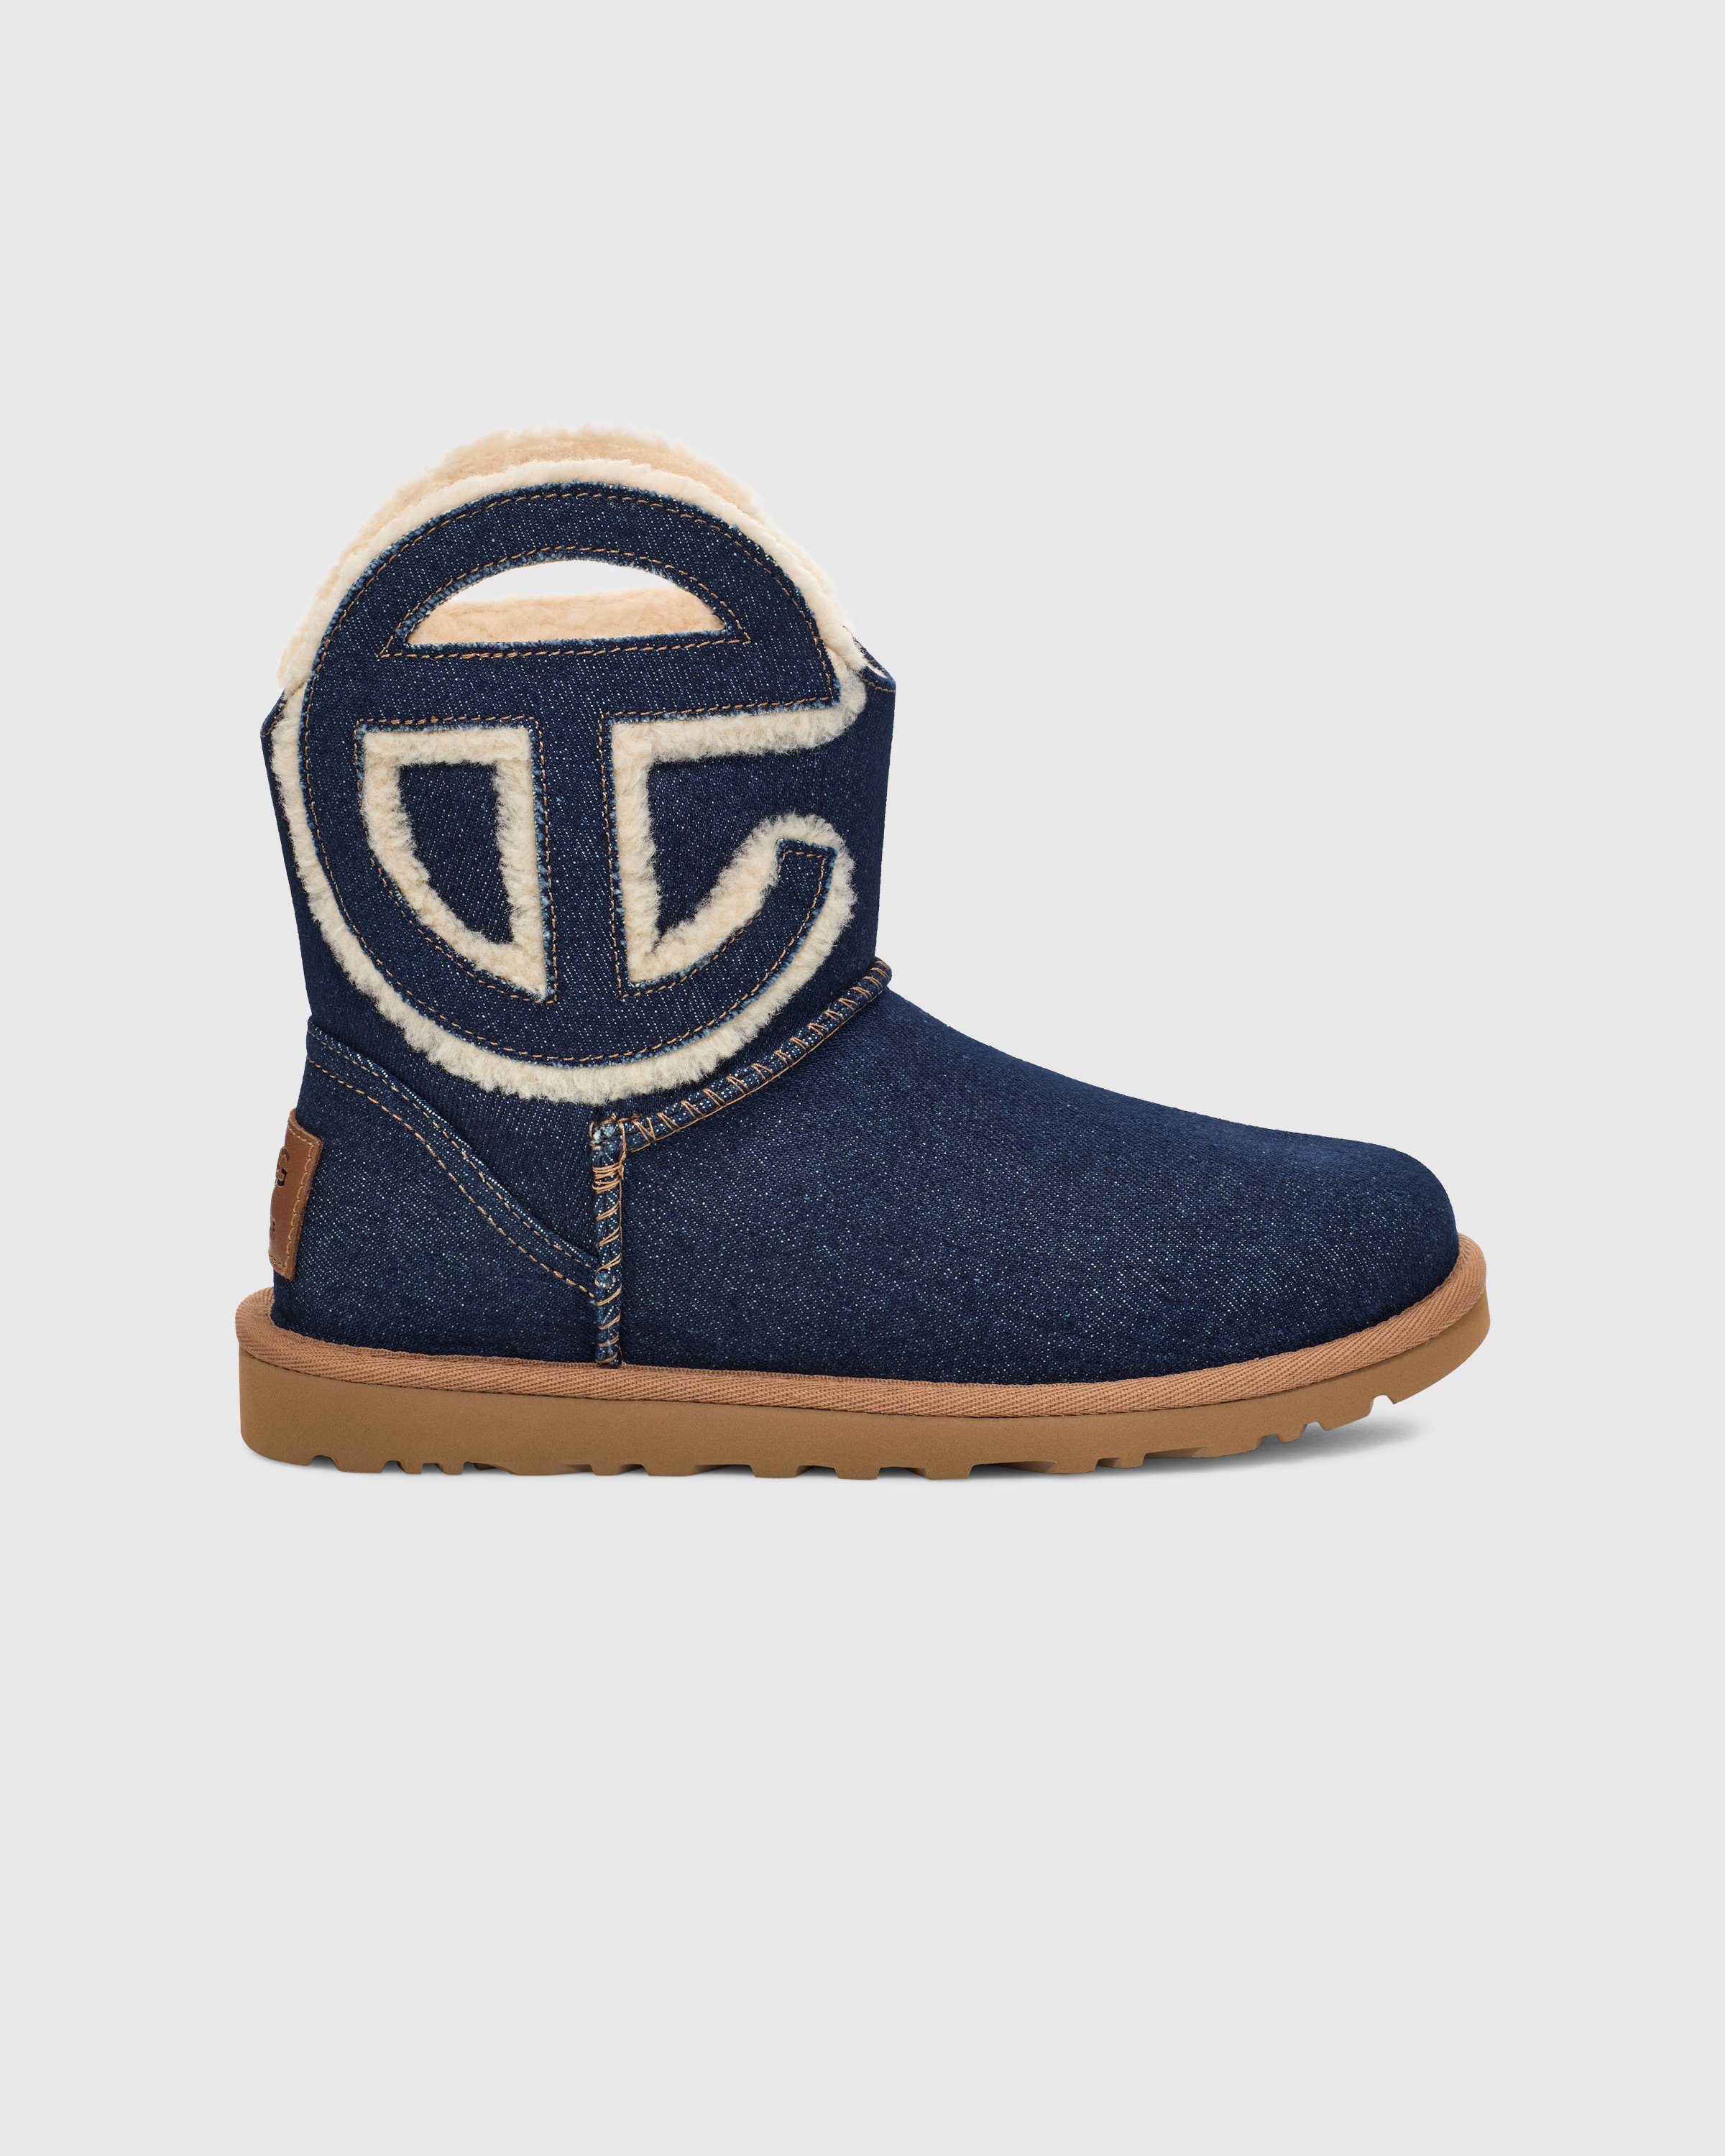 Ugg x Telfar - LOGO MINI BOOT 2 - Footwear - Blue - Image 1